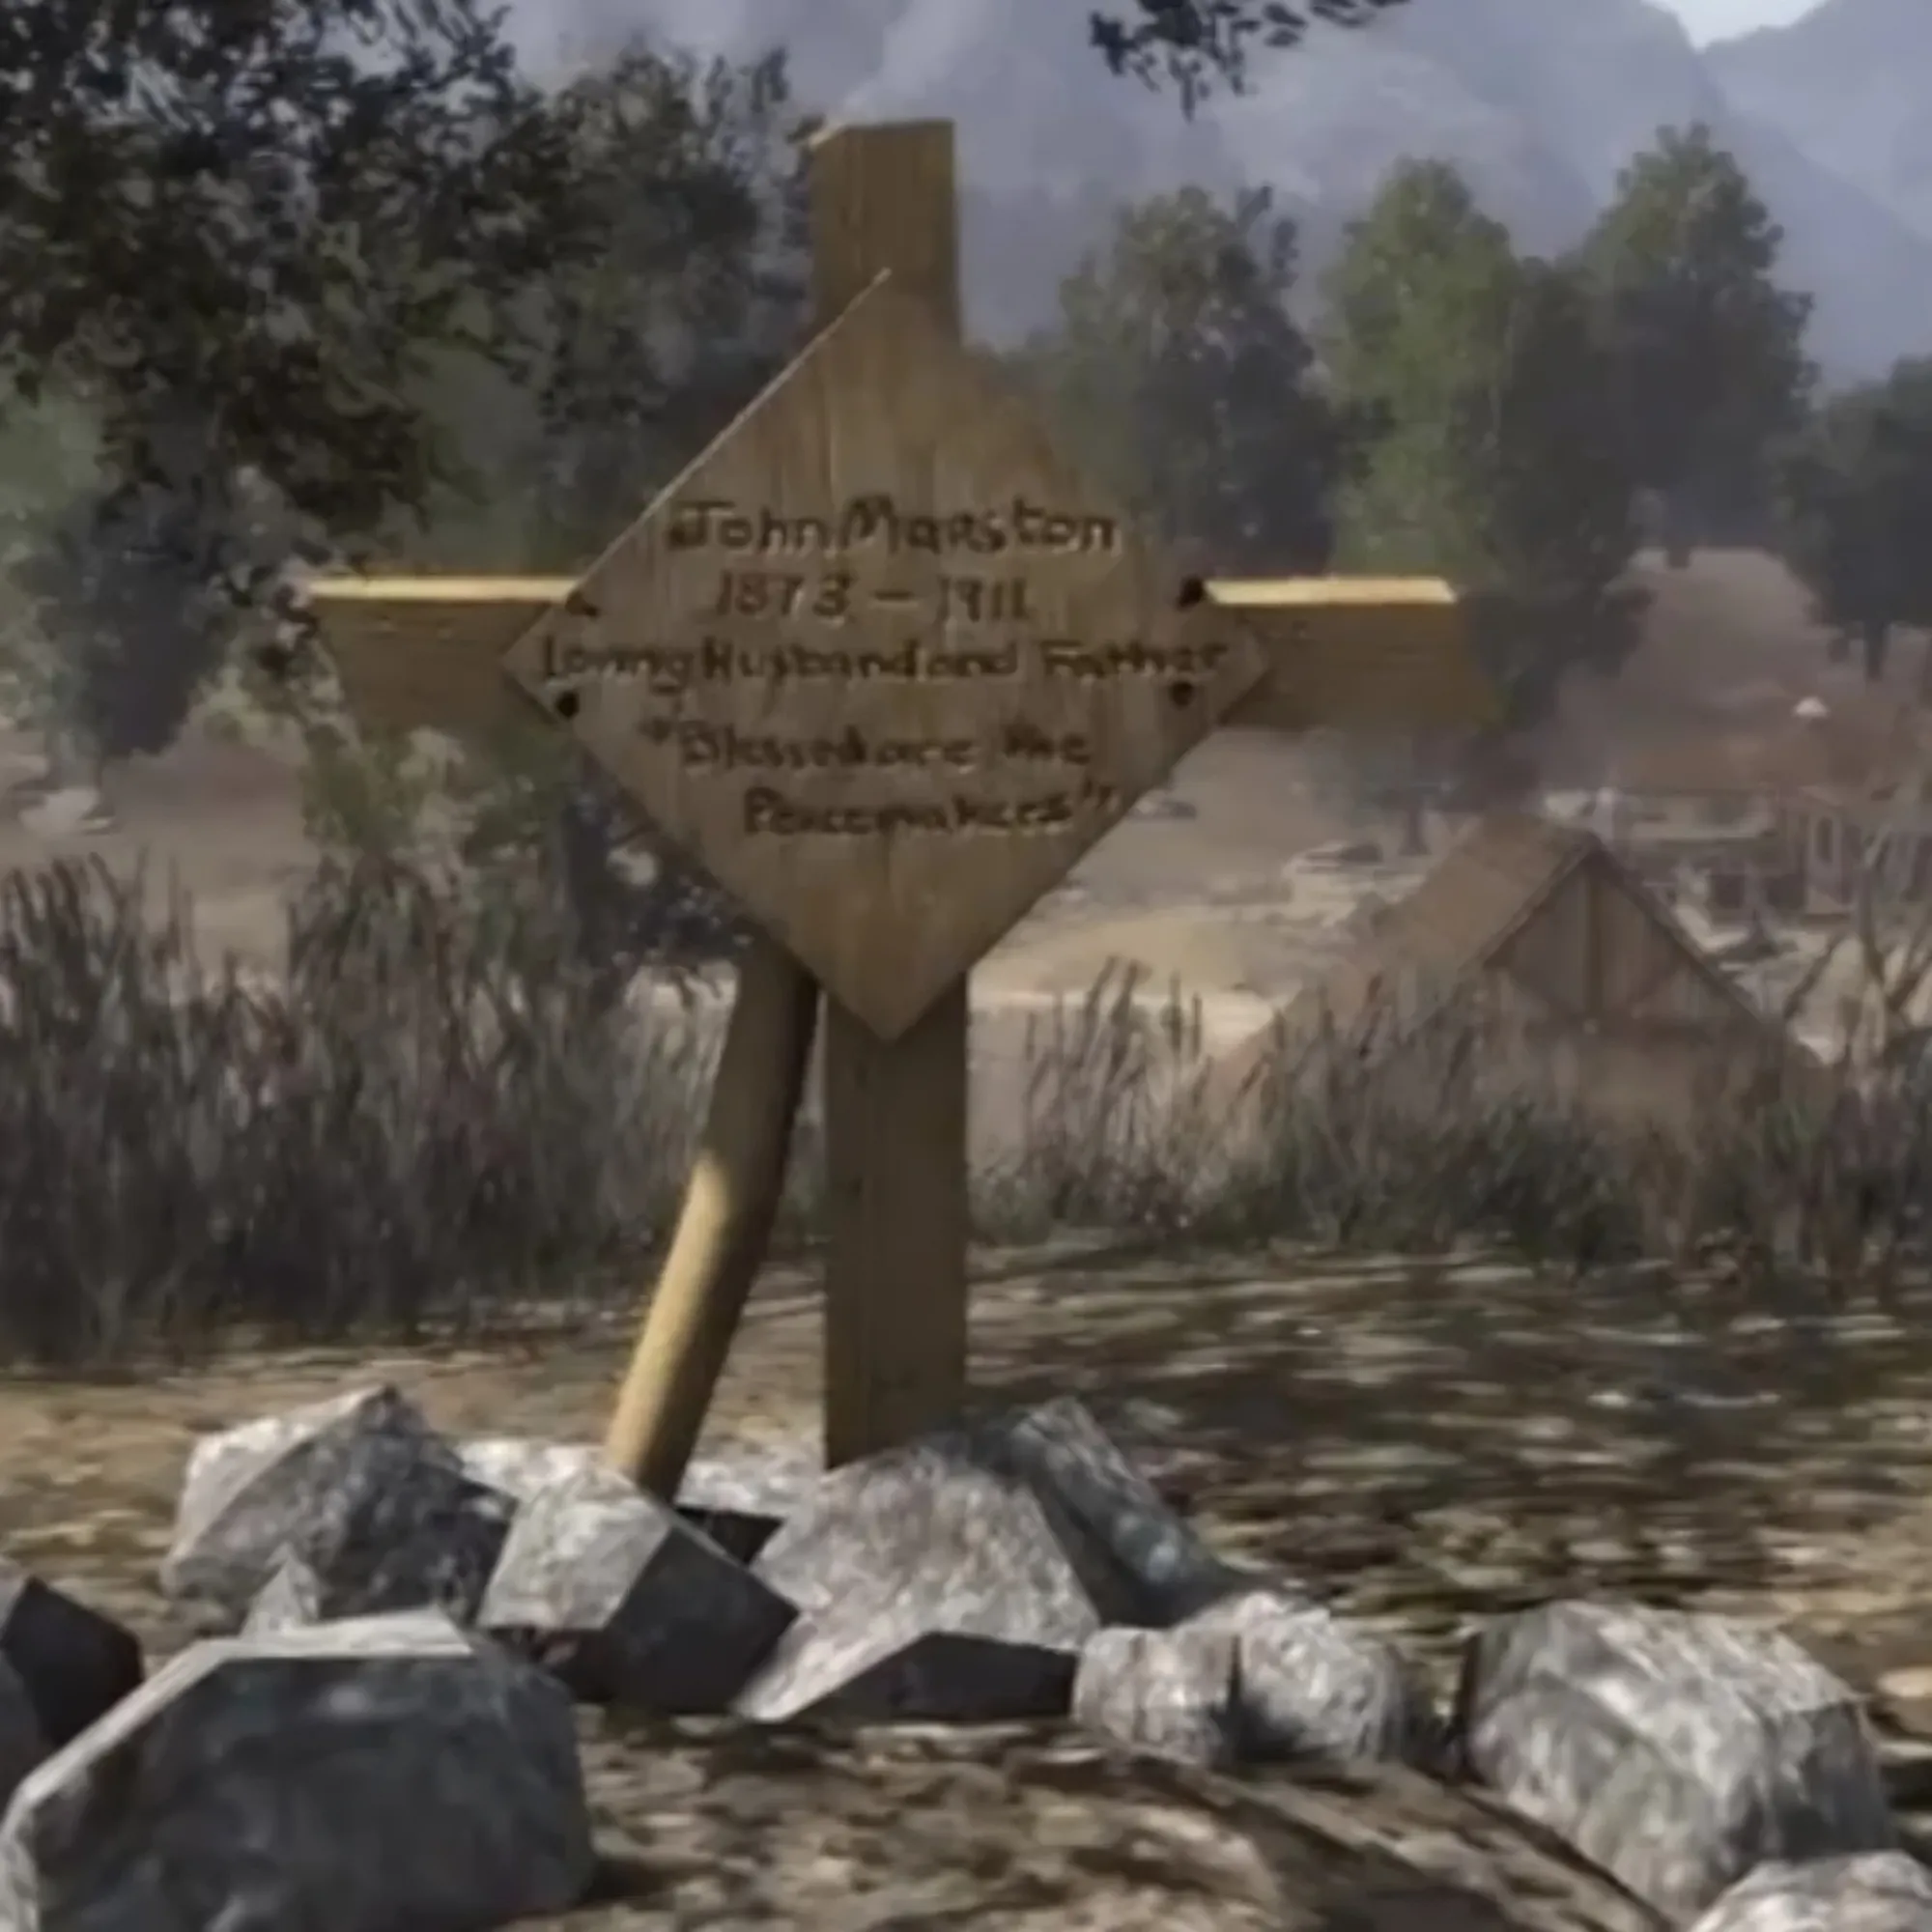 John Marston's Grave in Red Dead Redemption.